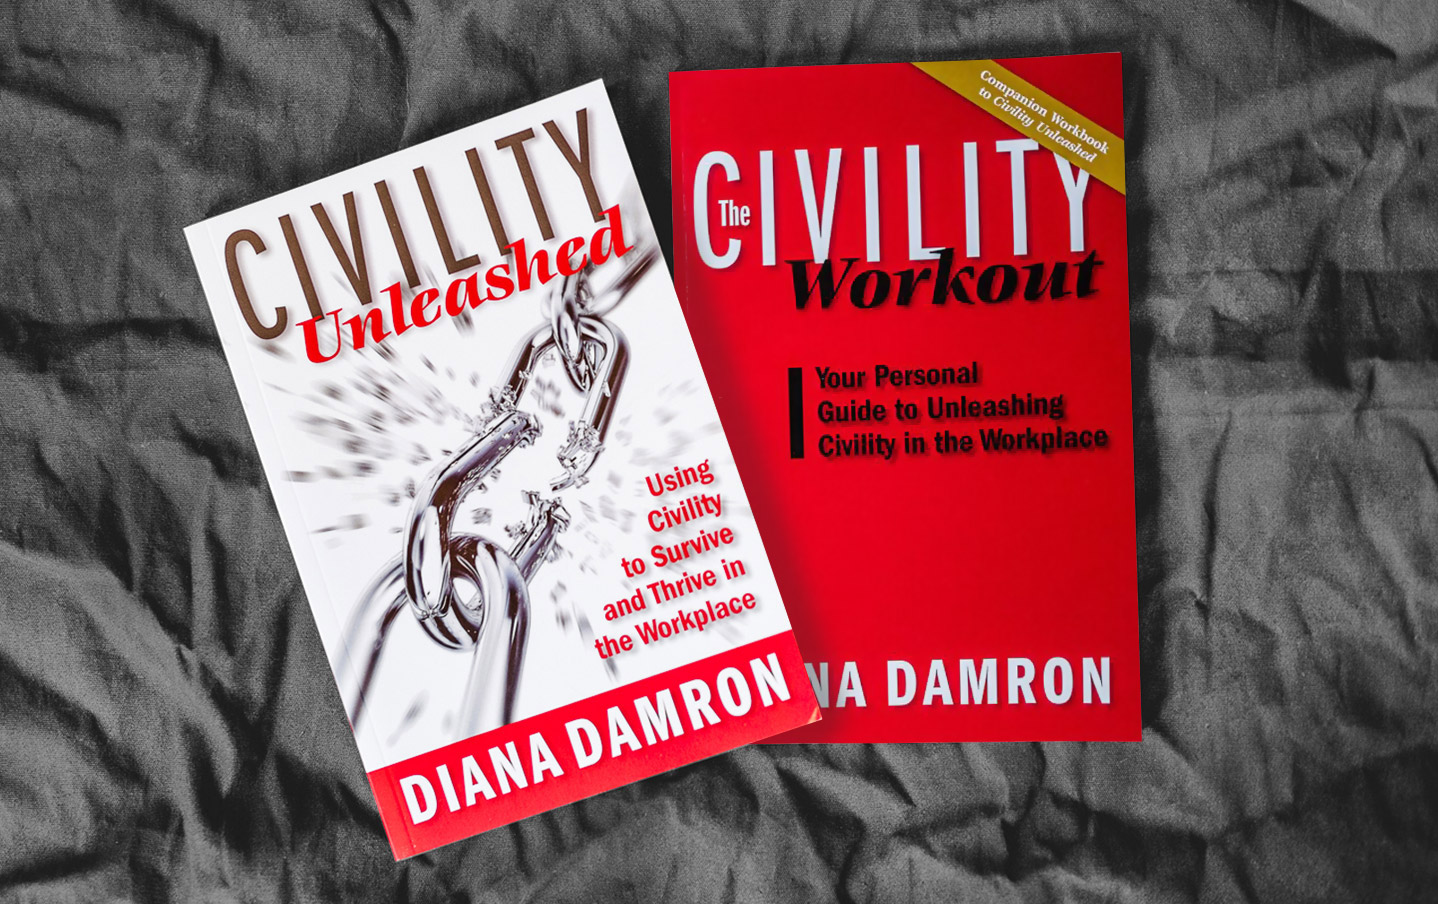 Diana Damron: Civility Workout, Civility Unleashed